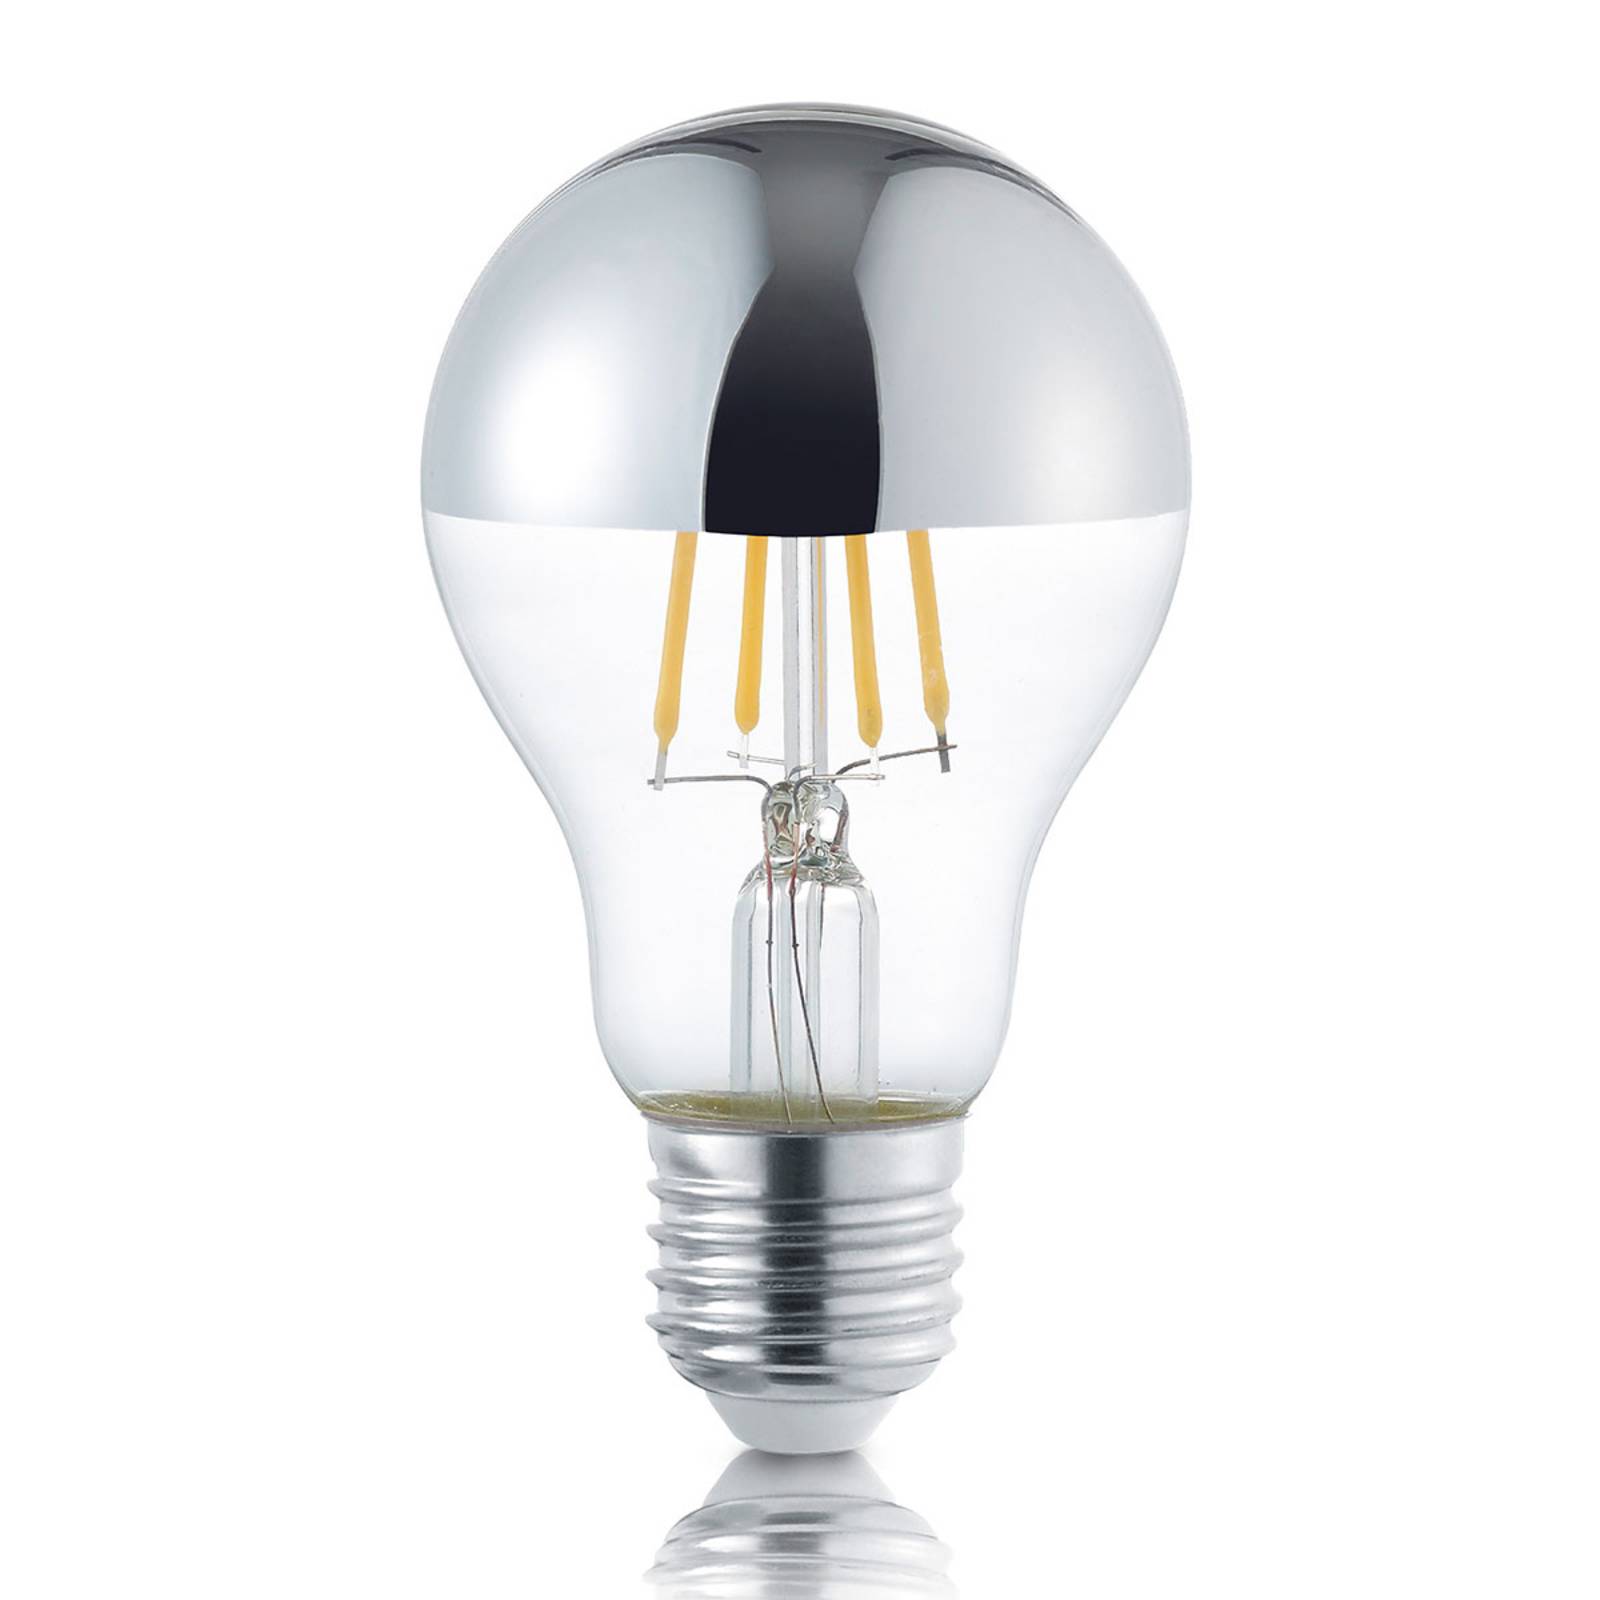 Trio Lighting Lampadina LED specchiata E27 4W bianco caldo